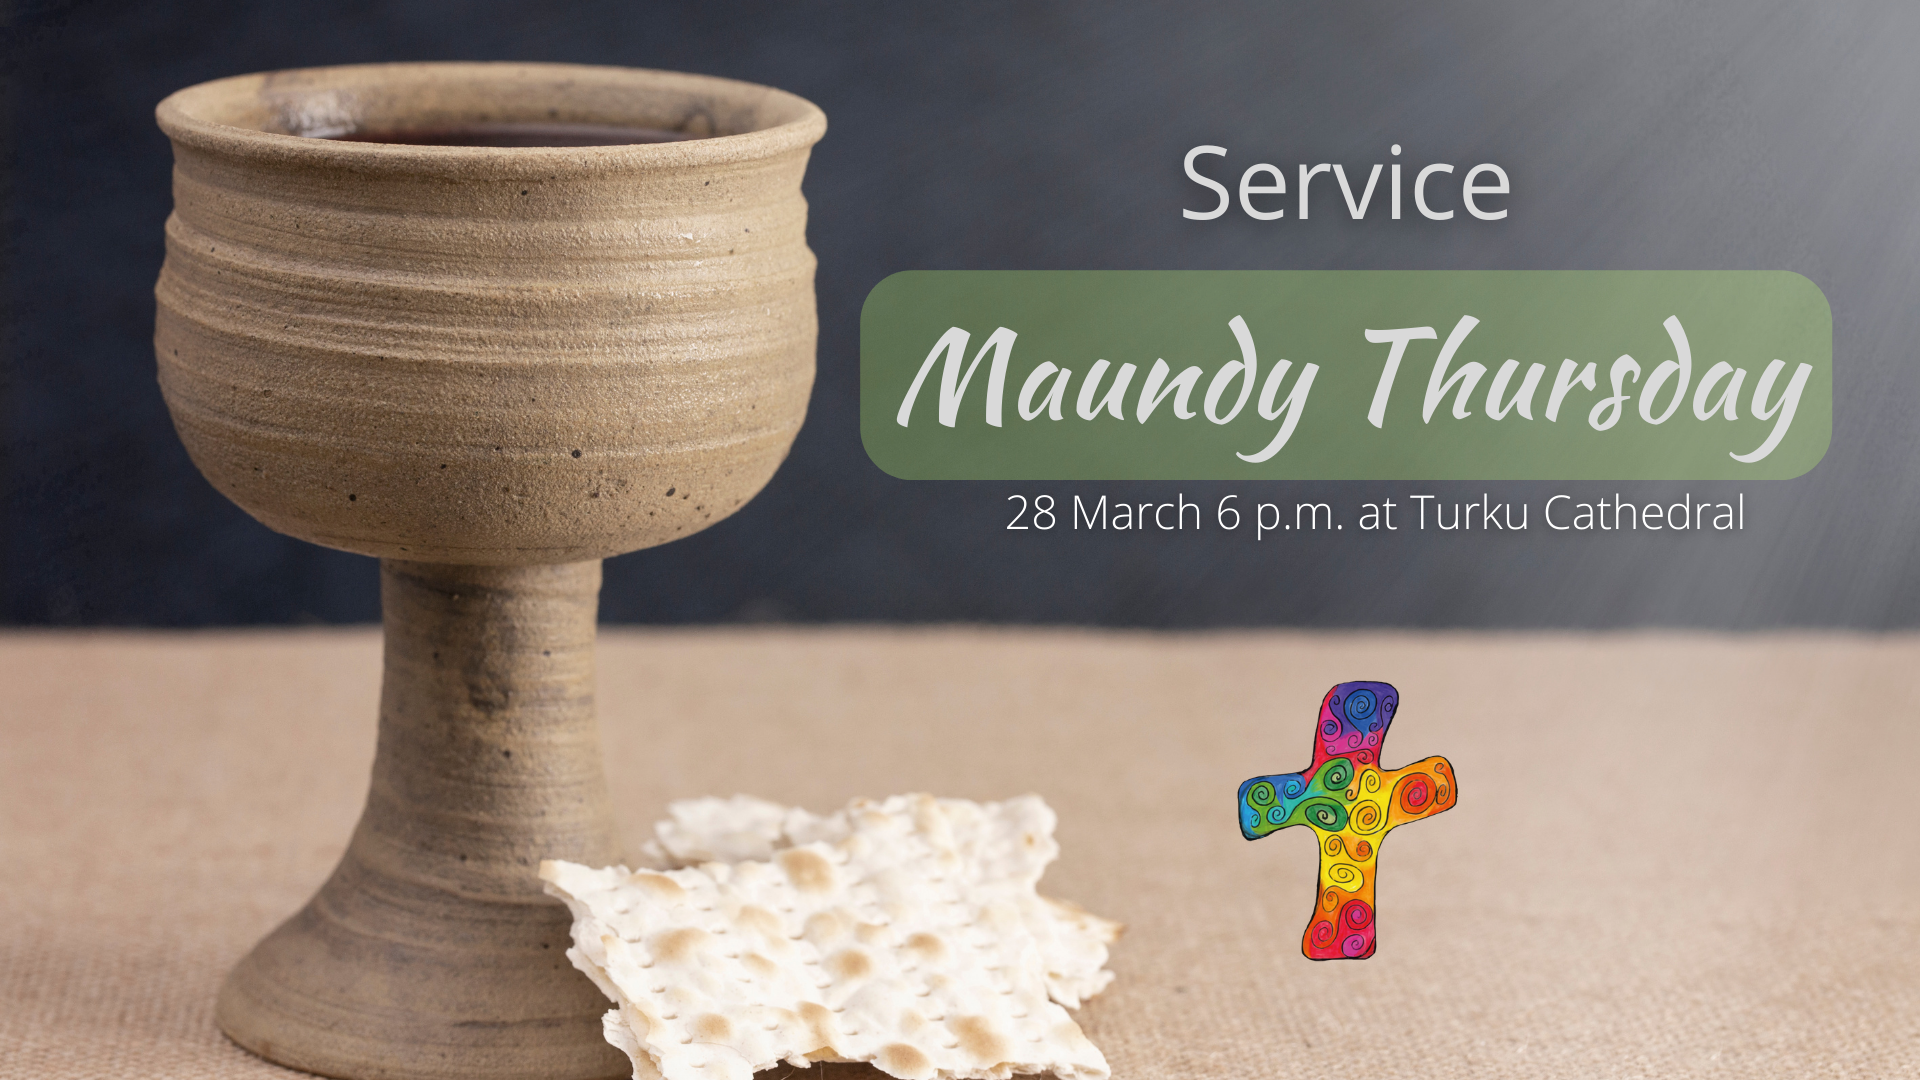 Service at Turku Cathedral - Maundy Thursday